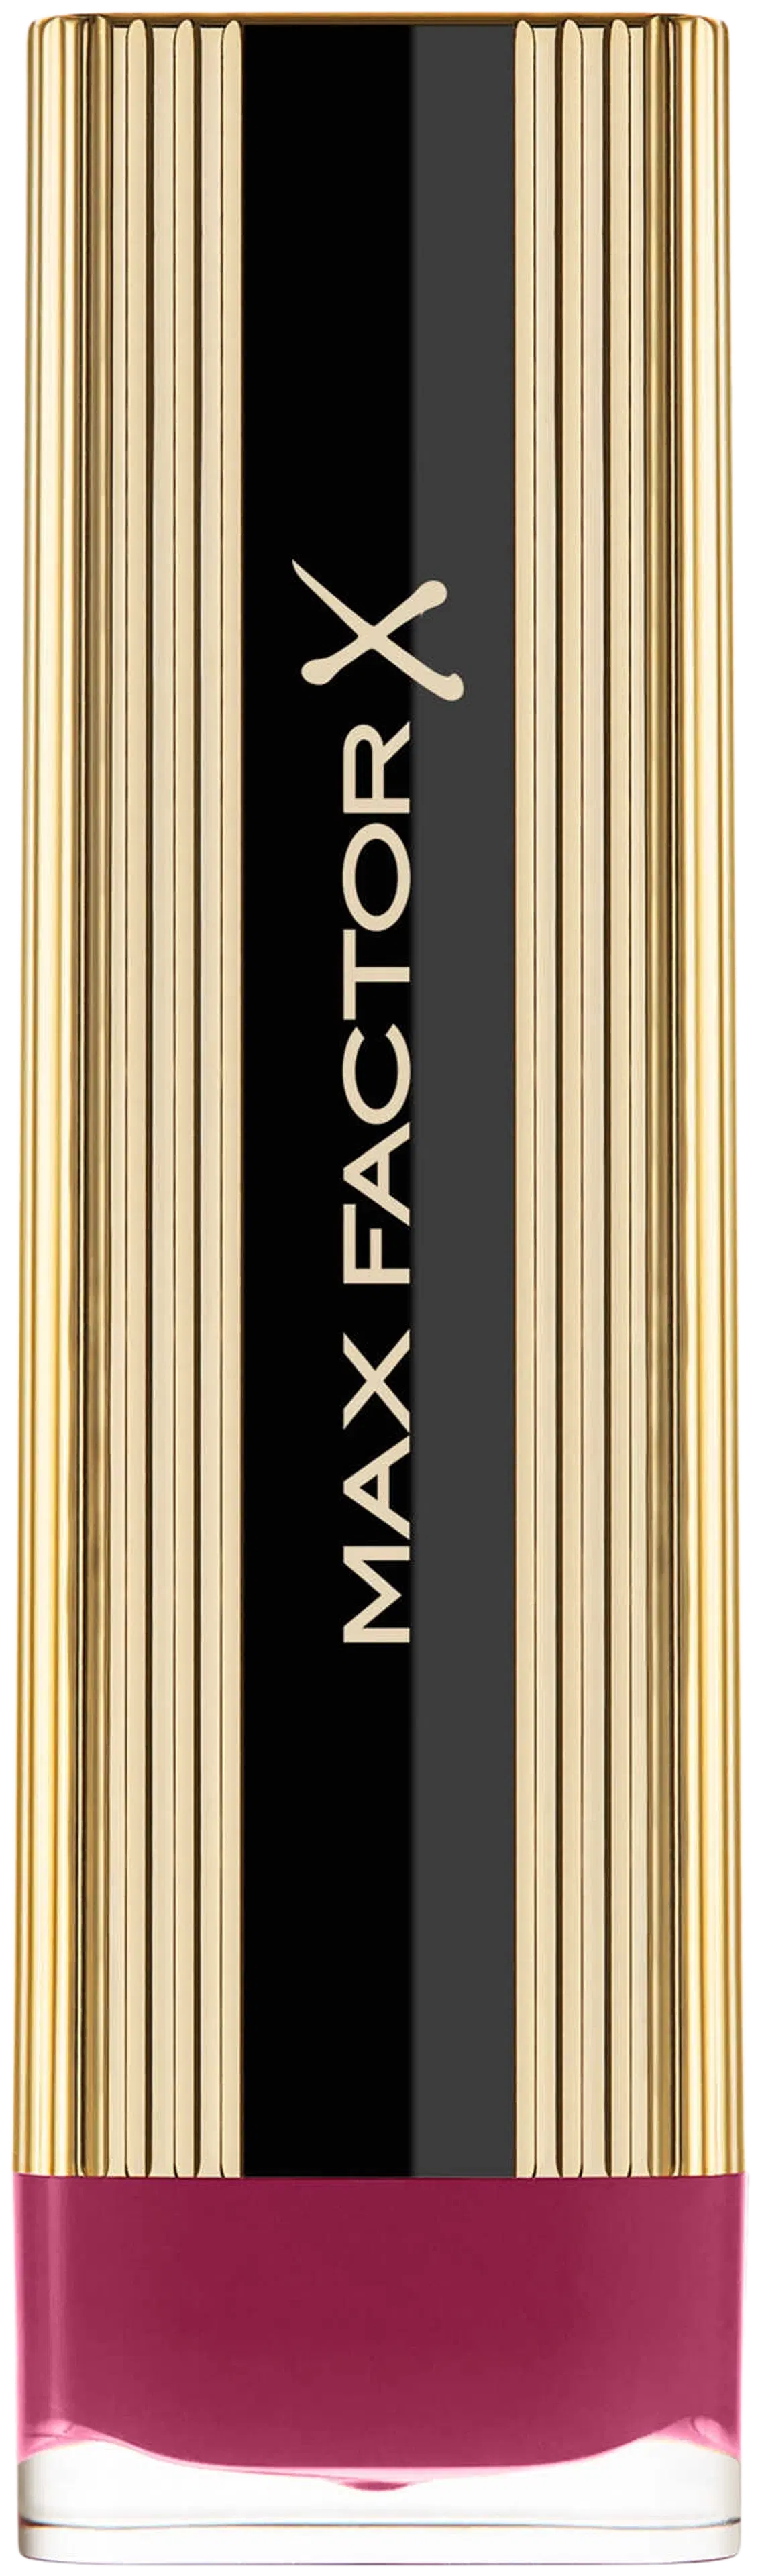 Max Factor Colour Elixir huulipuna 4 g, 110 Rich Raspberry